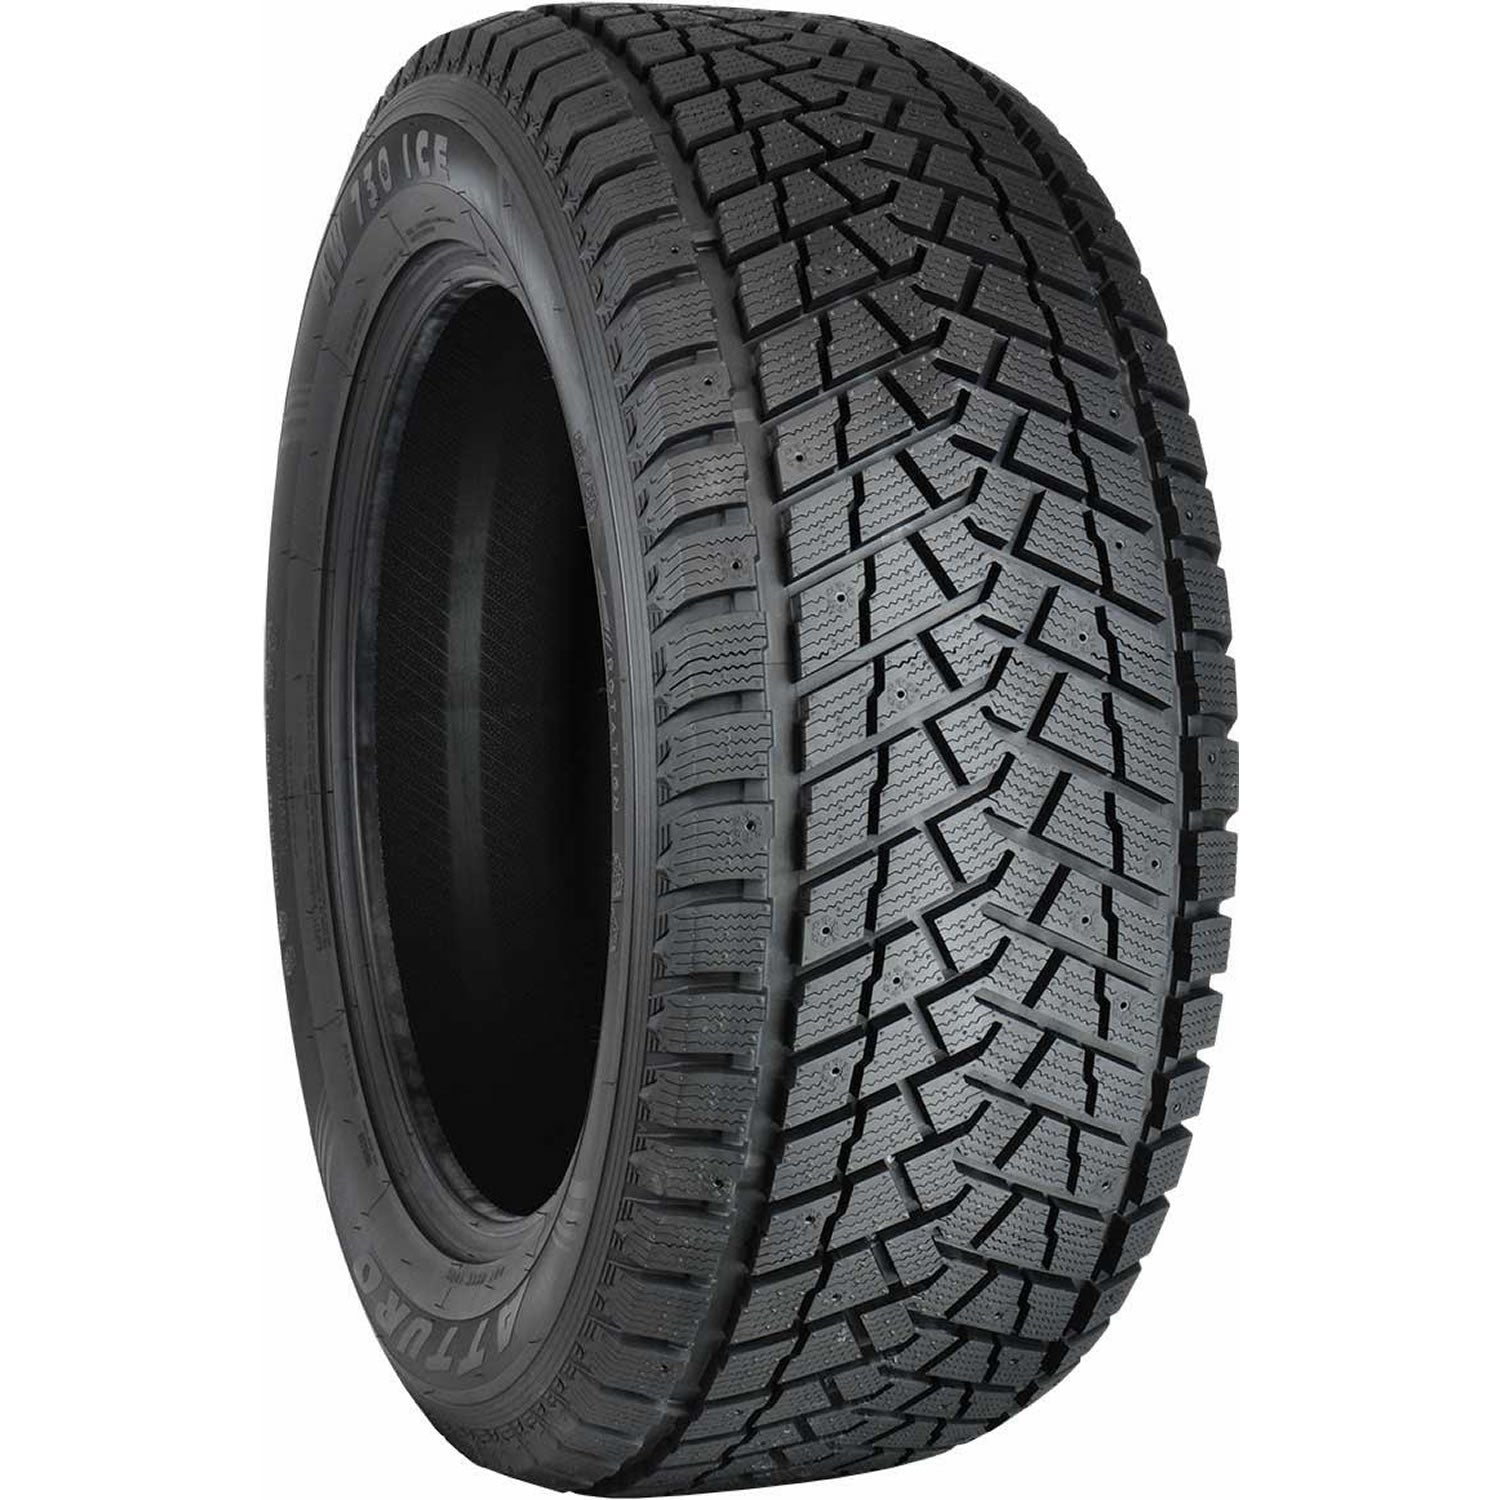 ATTURO AW730 ICE 255/55R19 (30.1X10.5R 19) Tires